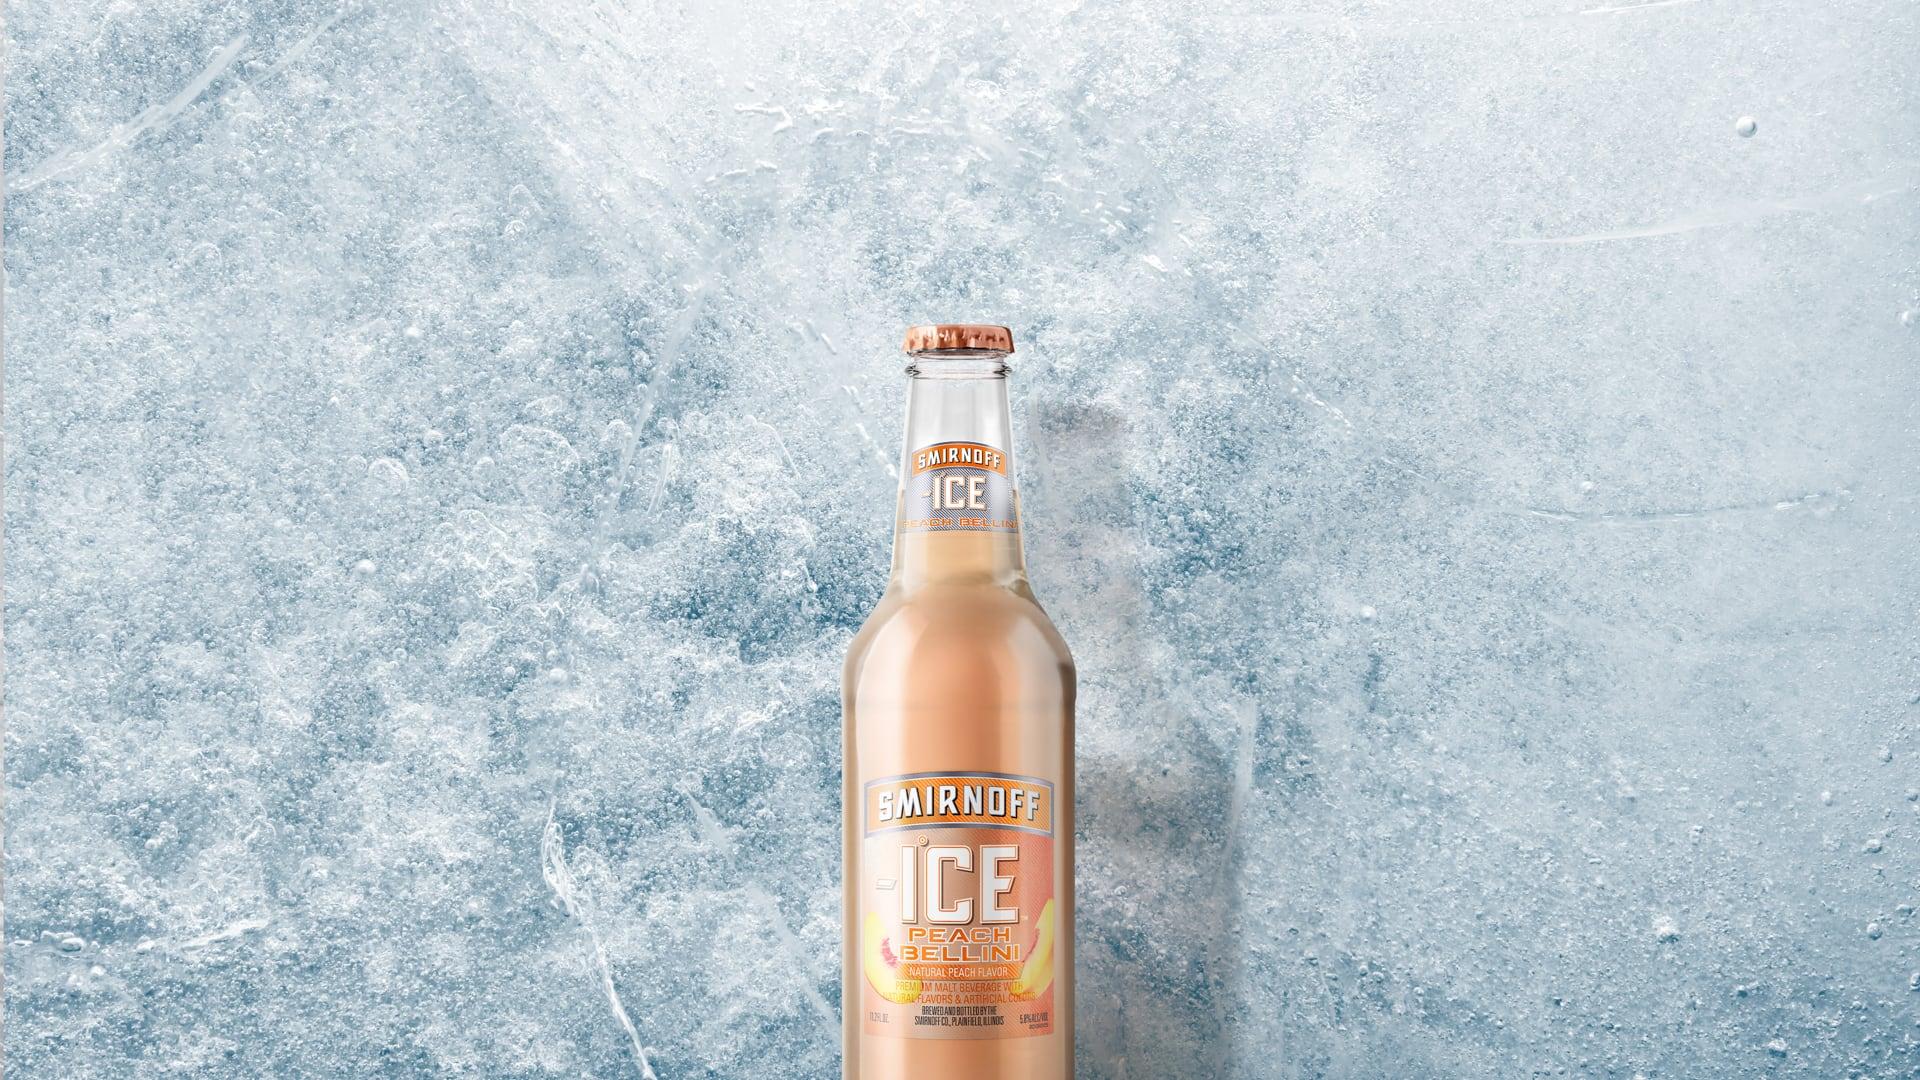 Smirnoff Ice Peach Bellini on a Icy background